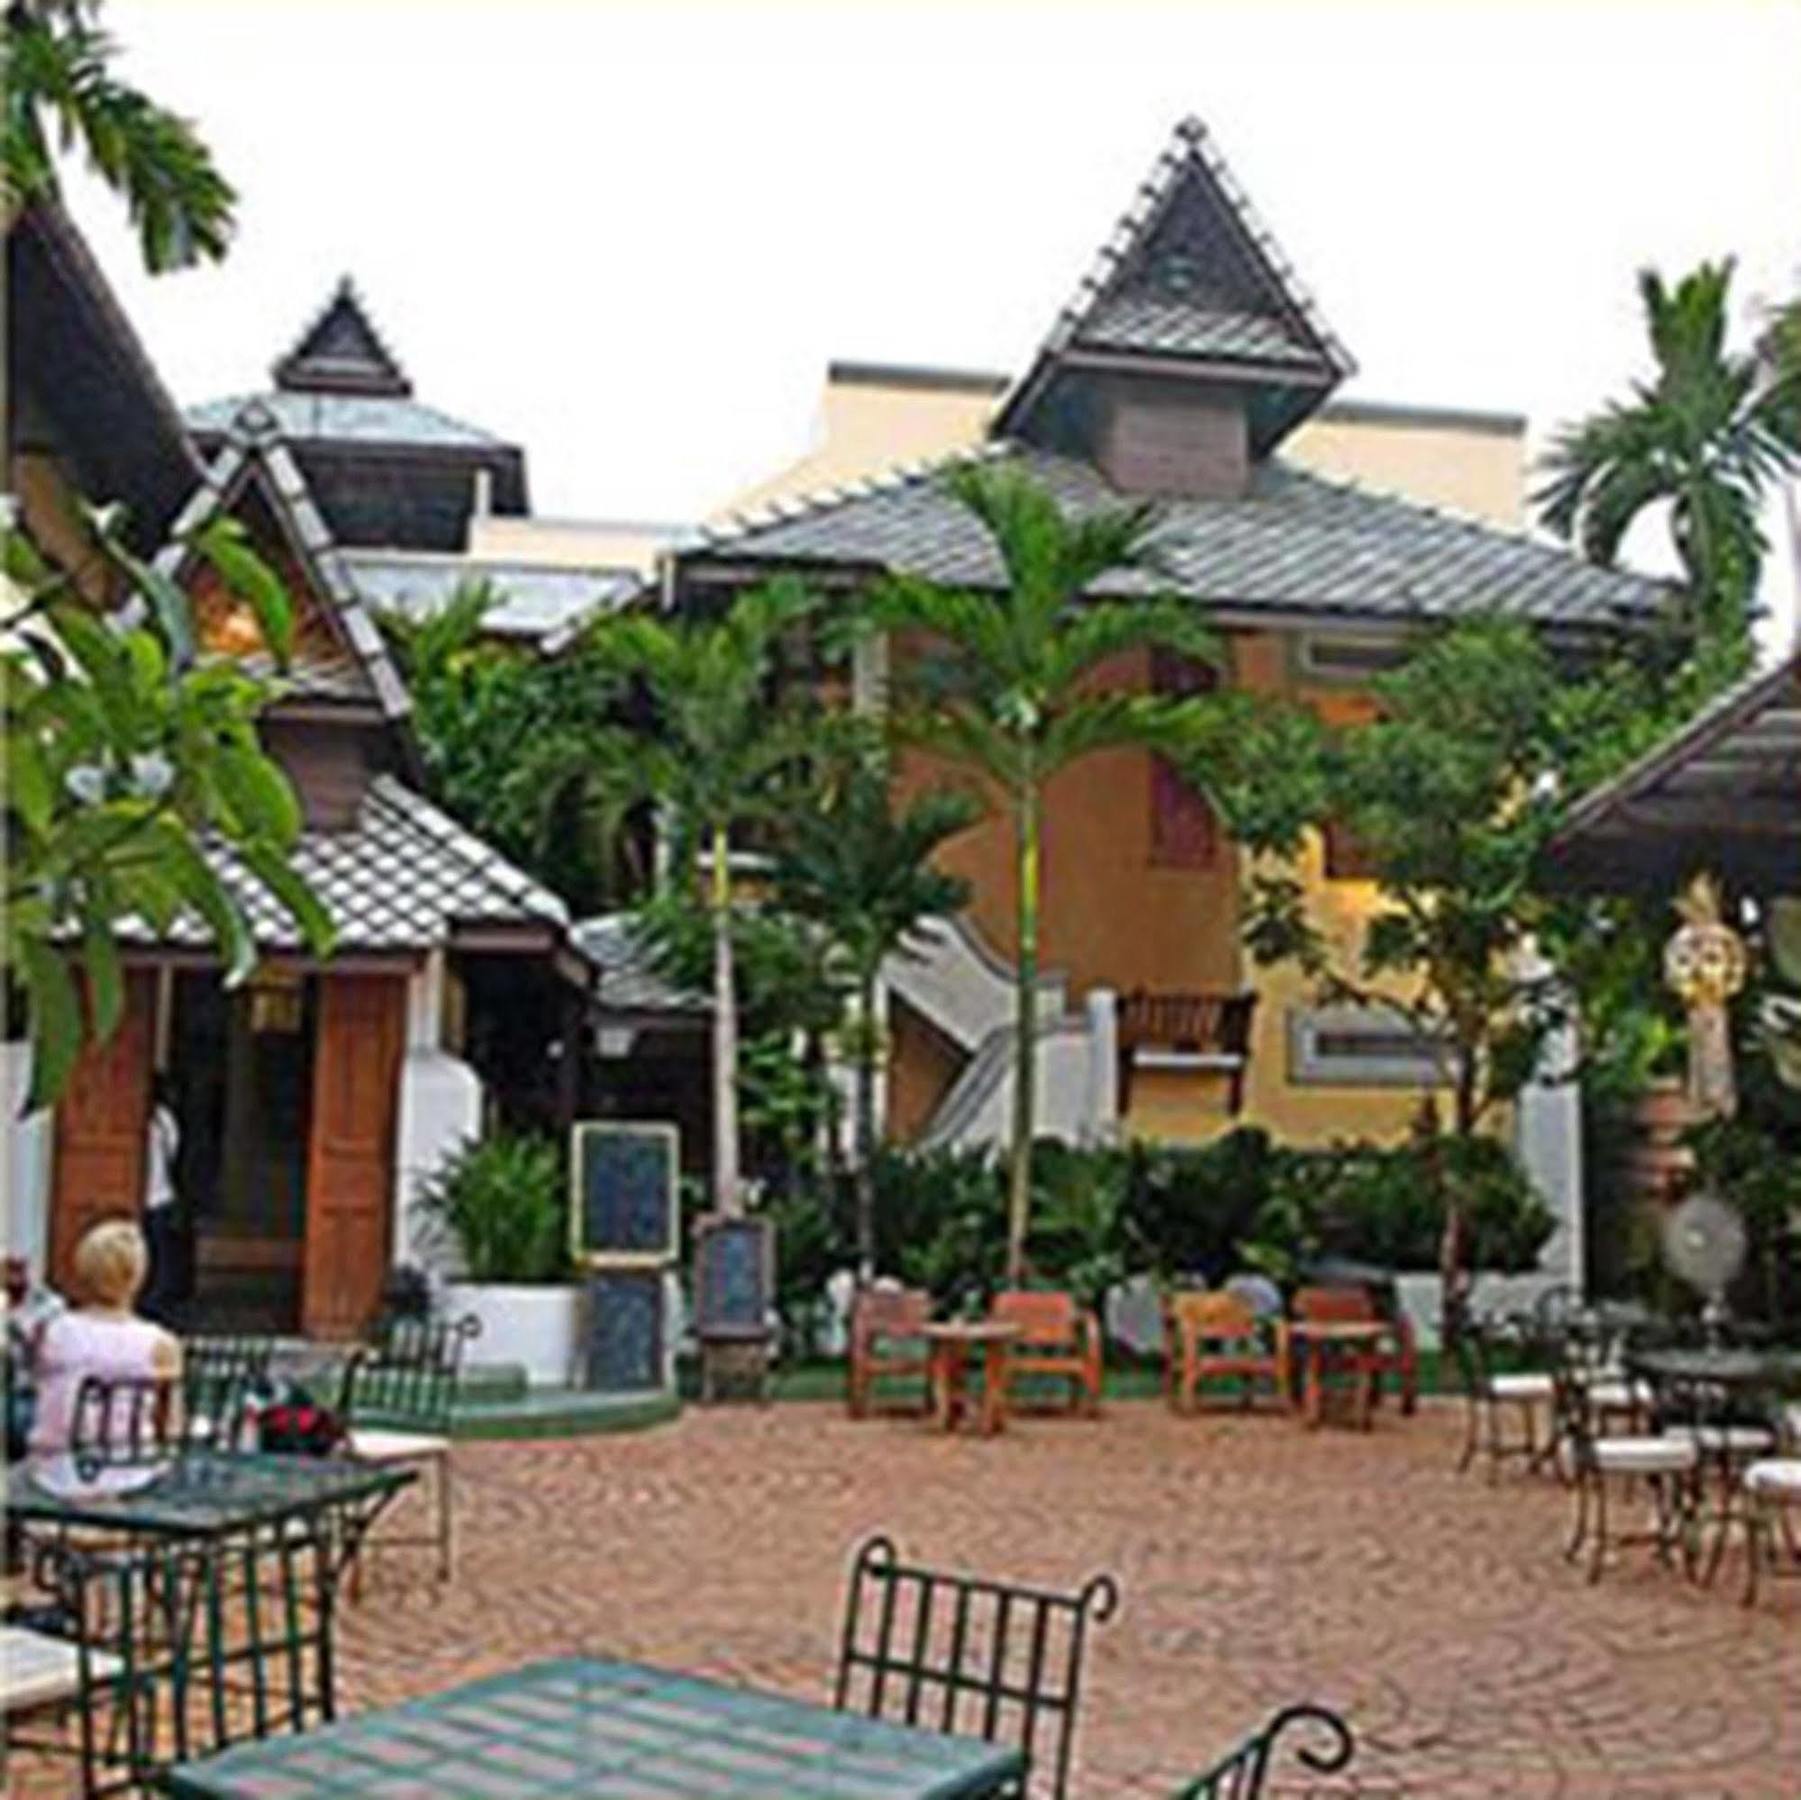 Tadkham Village, Chiang Mai Esterno foto